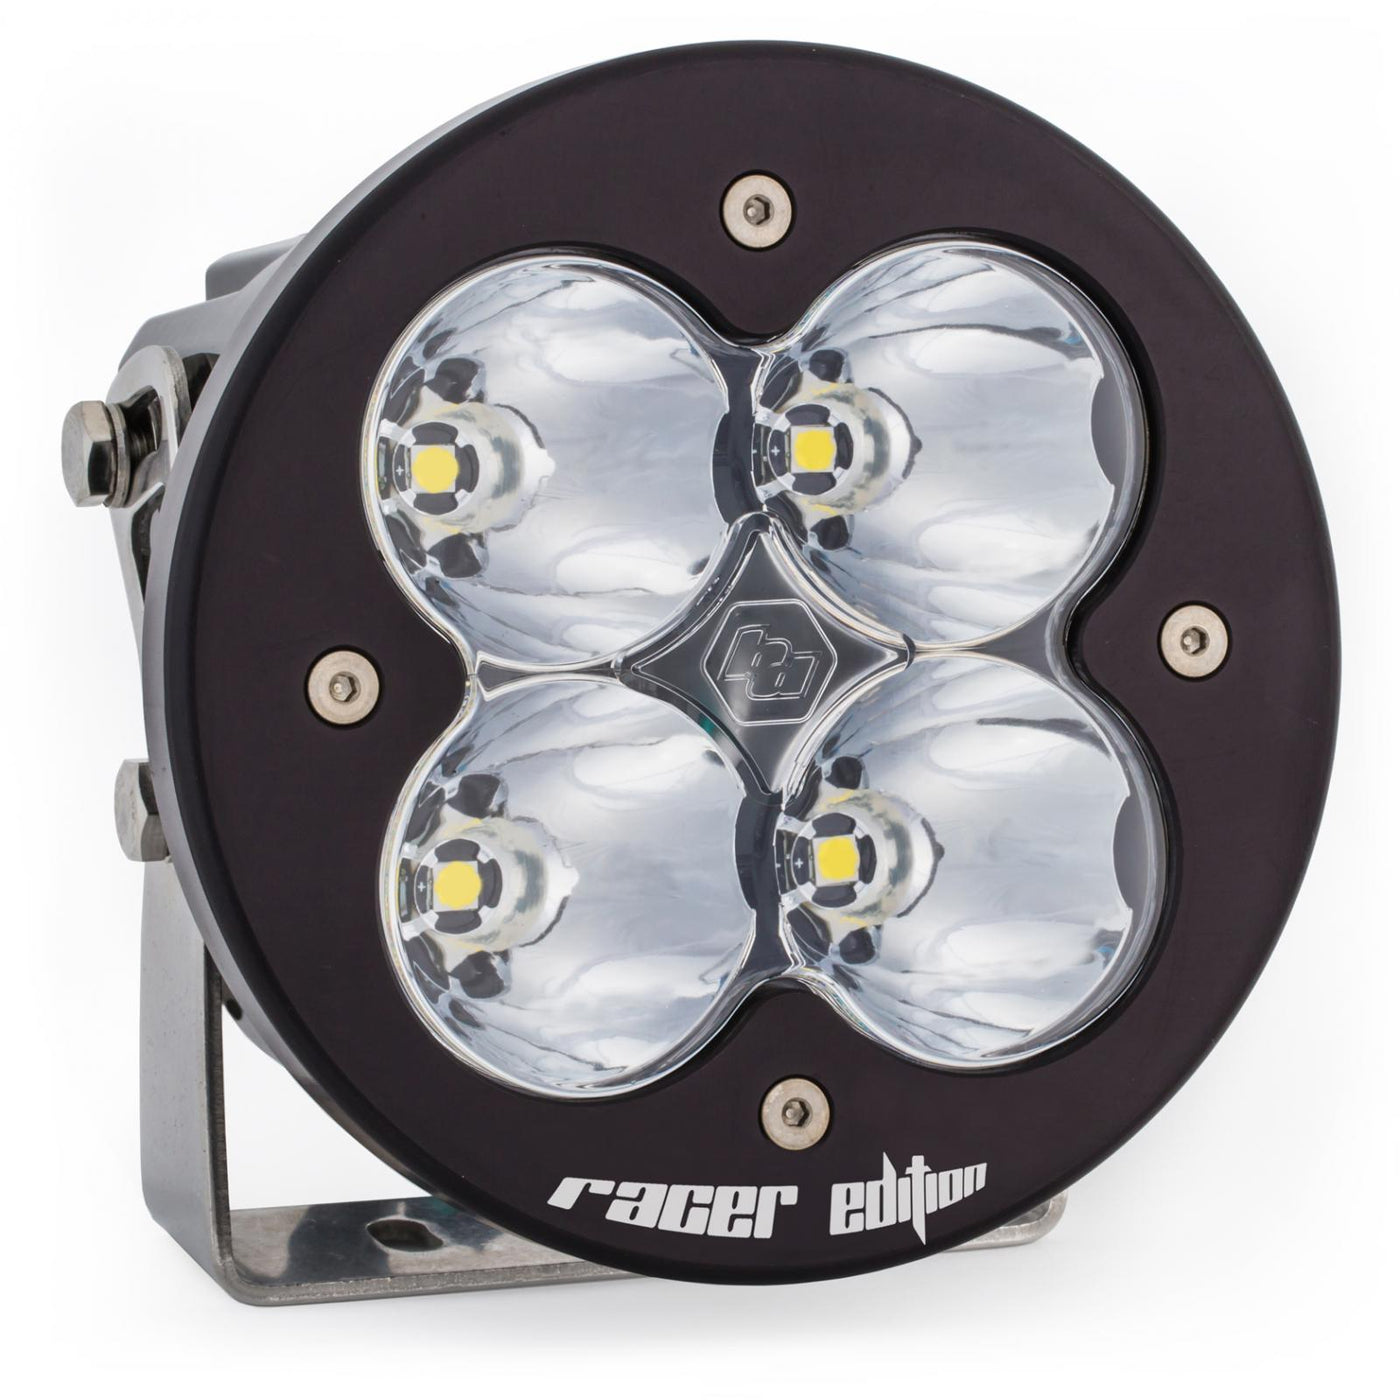 Baja Designs 690002 LED Light Pods Clear Lens Spot XL Racer Edition High Speed